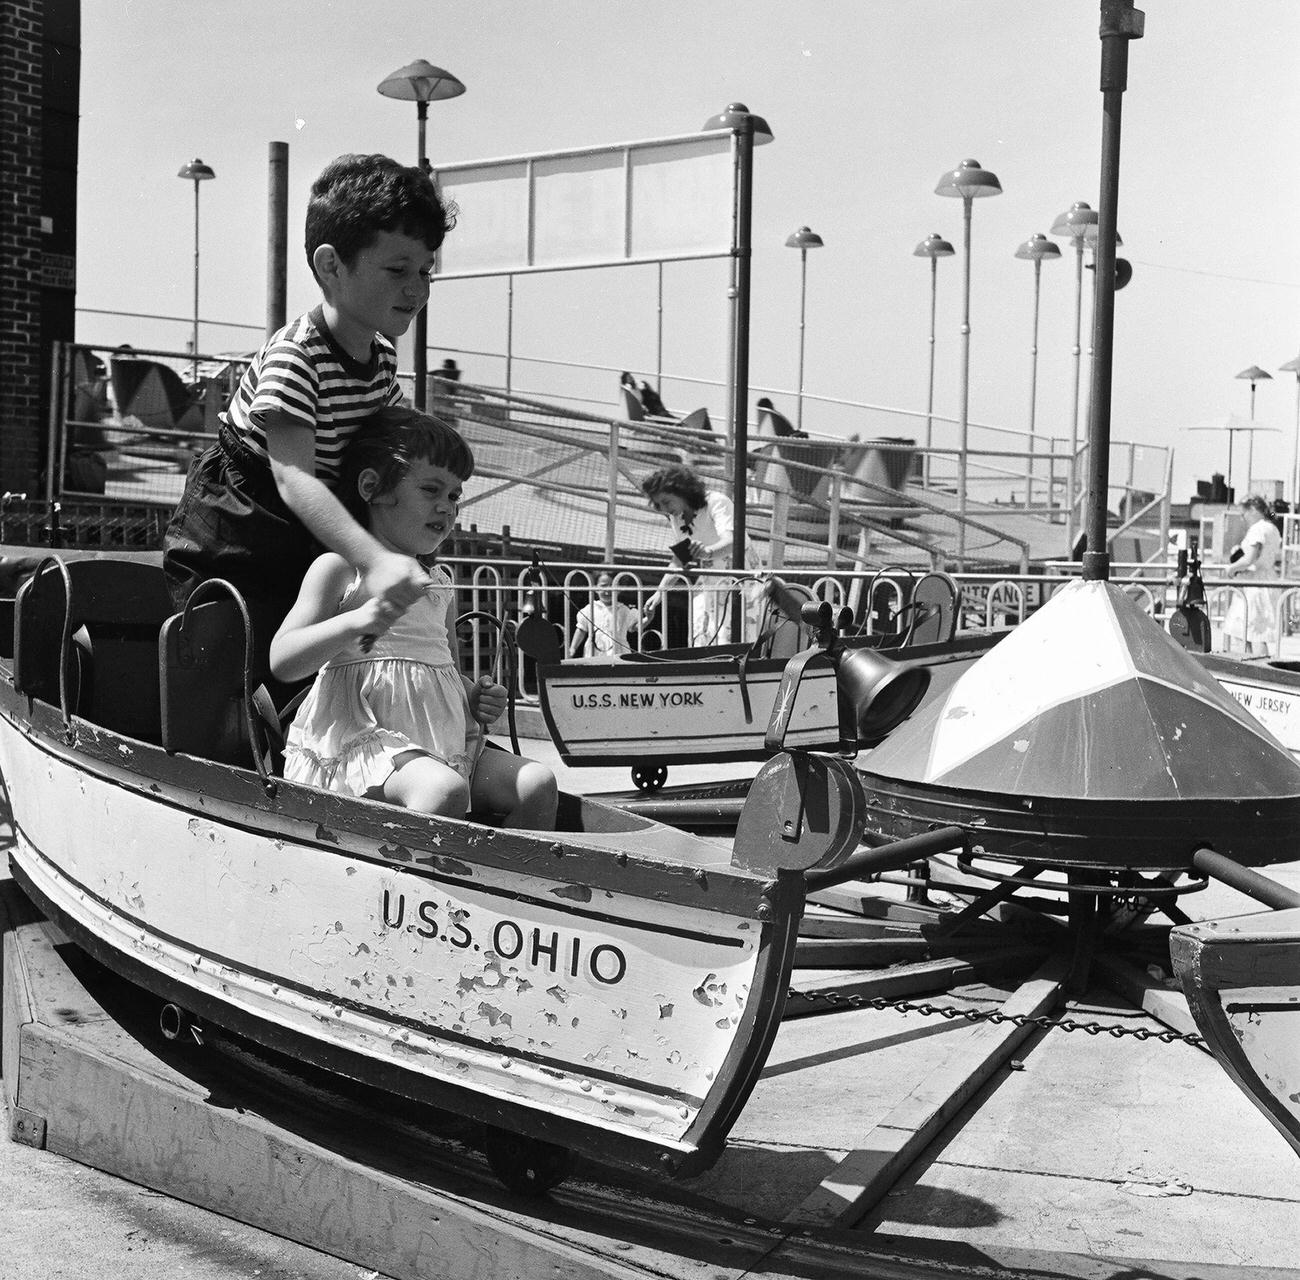 Siblings Enjoy Wooden Uss Ohio Ride At Coney Island, 1948